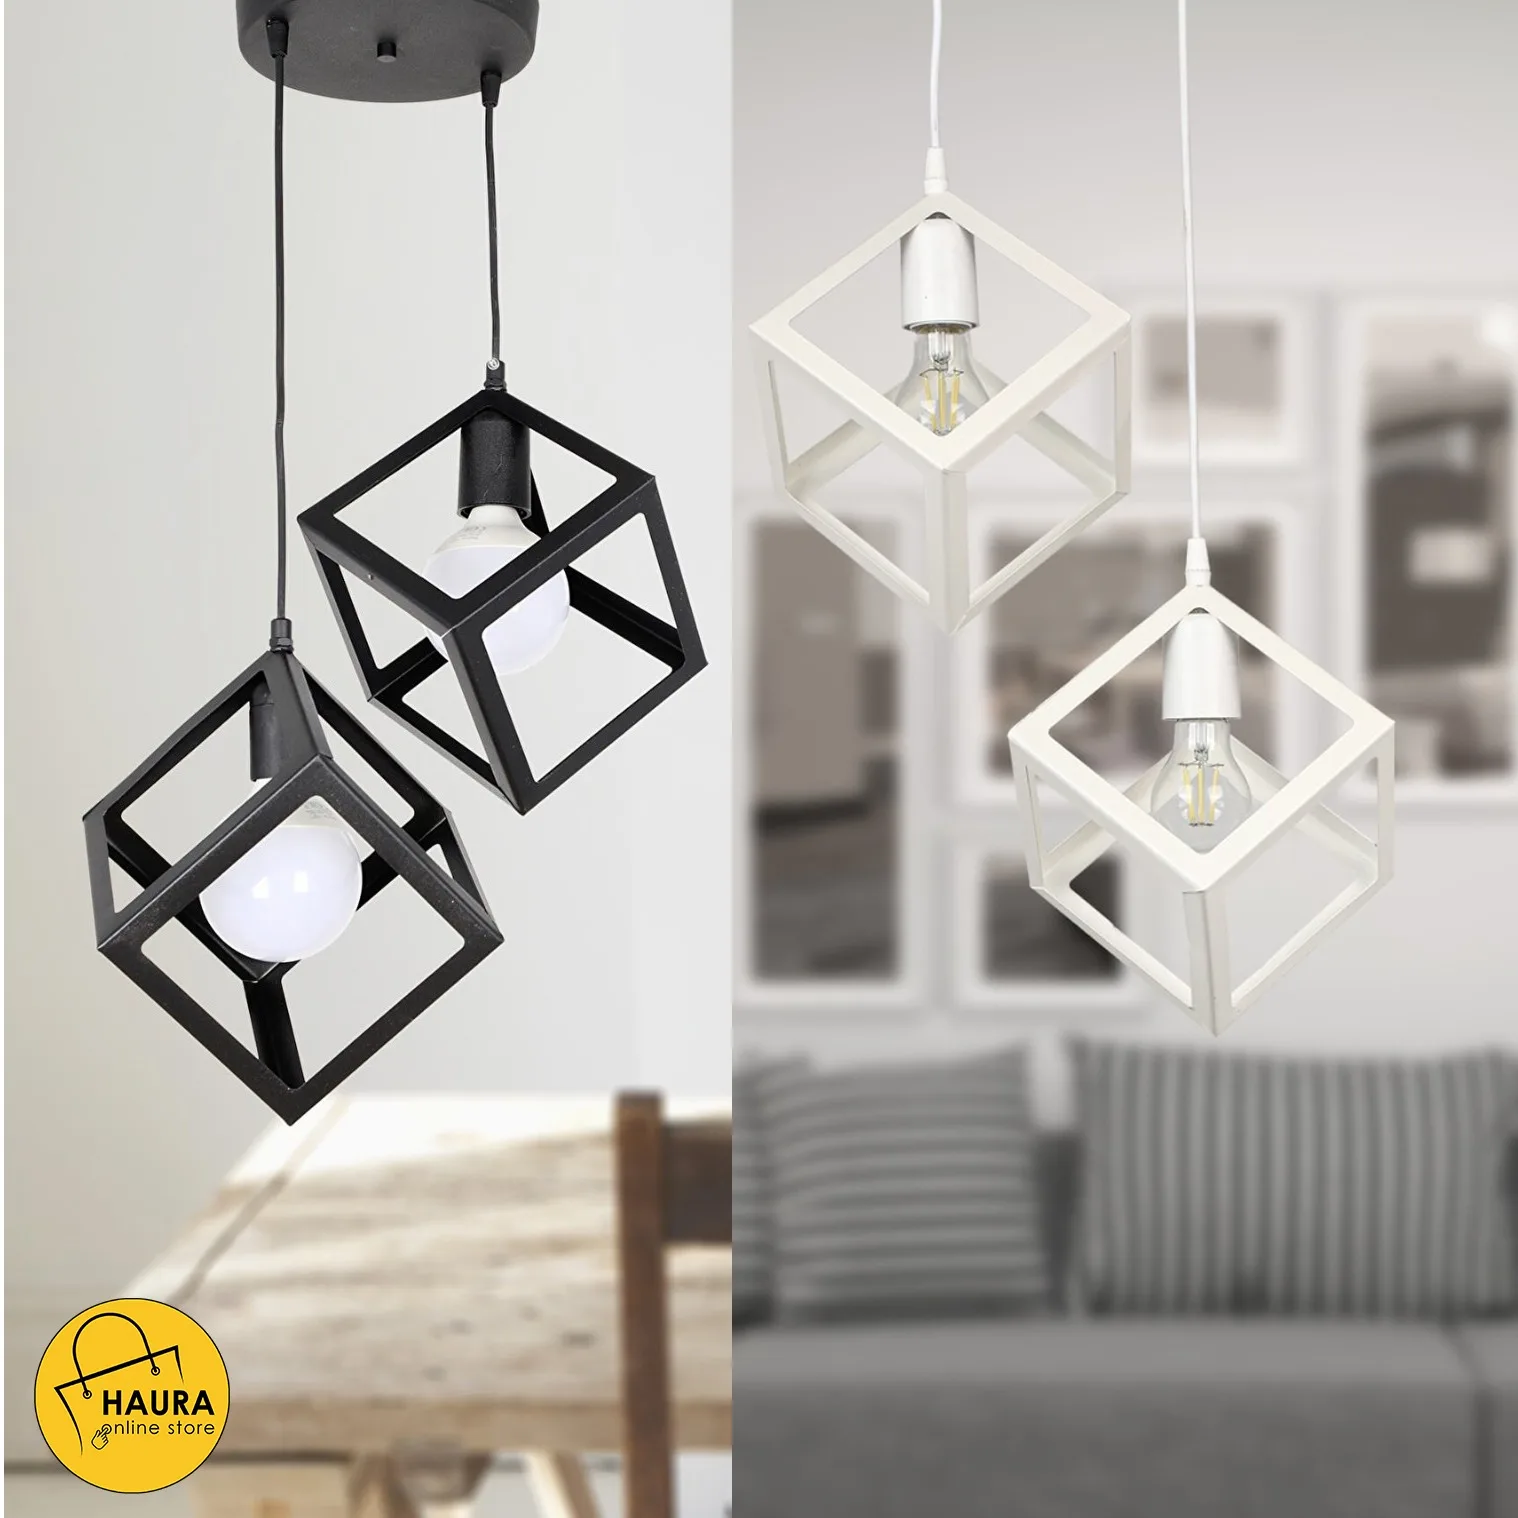 

Geometric Metal Cube Chandelier Modern Black & White Model Droplight Home Office Room Lighting Decoration Double E27 Lamp Entry